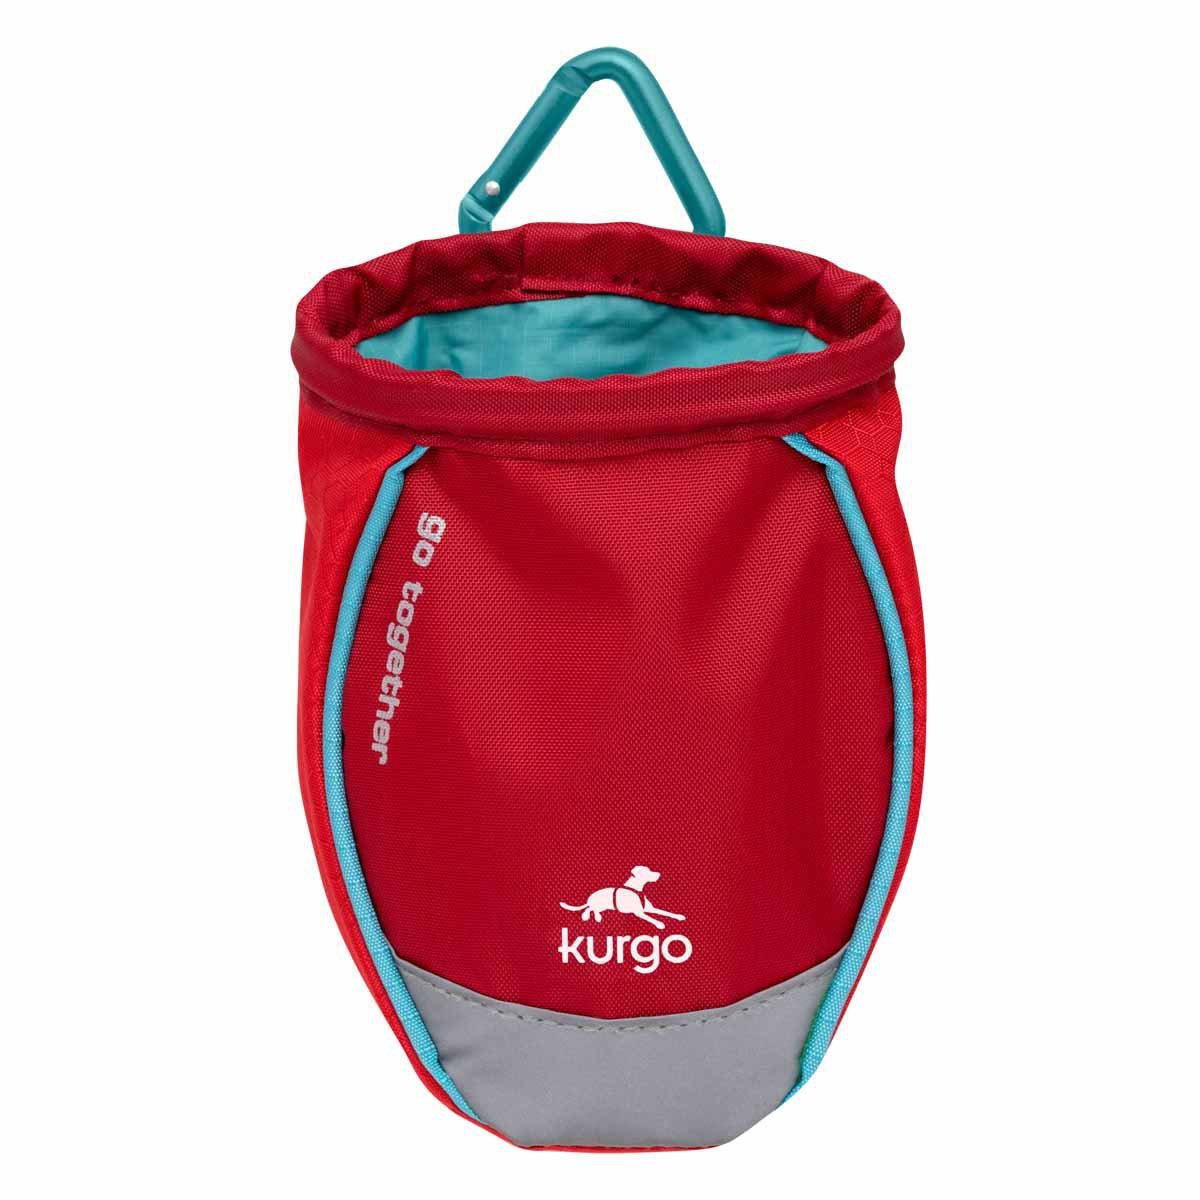 KURGO - Go Stuff It Treat Bag Red (636.1142)